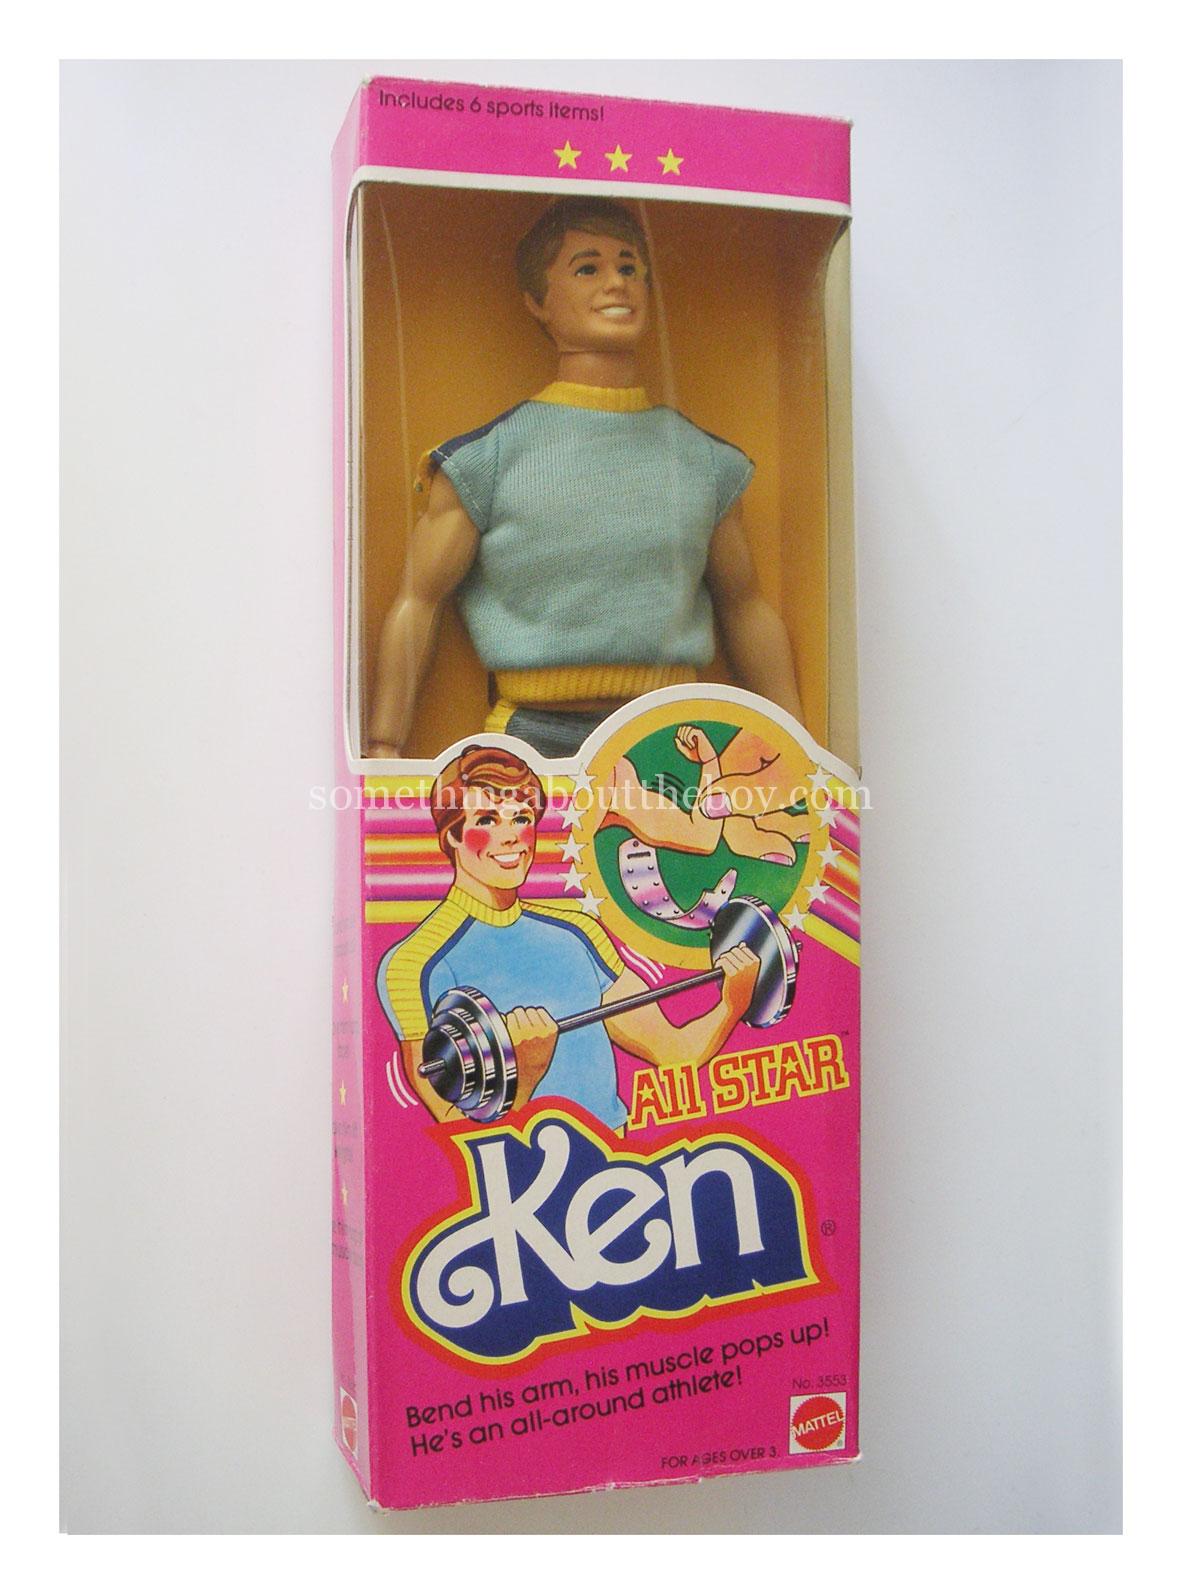 1982 #3553 All Star Ken in original packaging